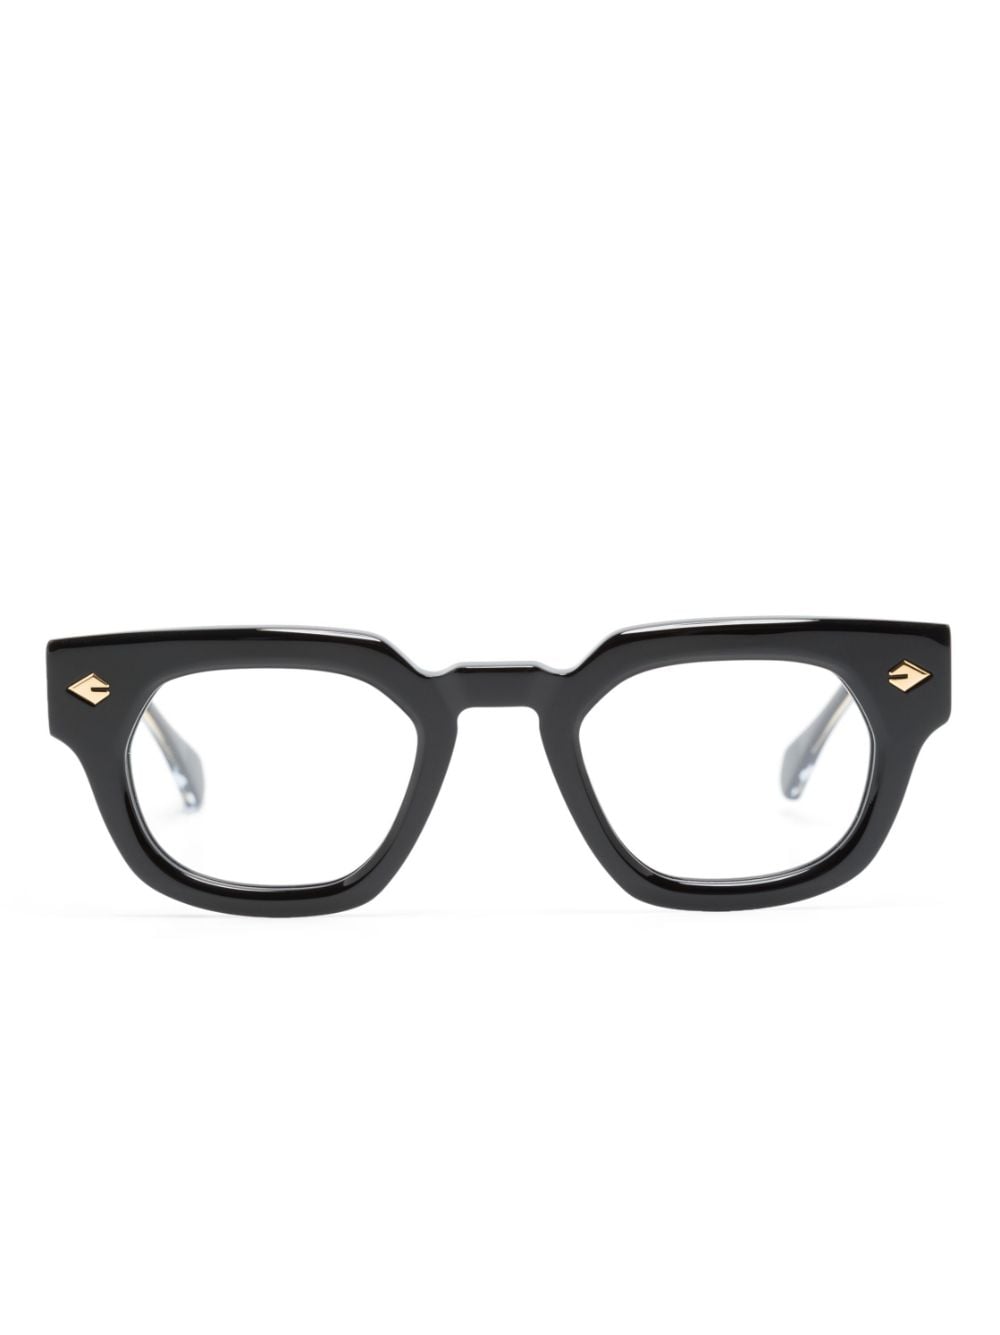 T Henri Eyewear Tuatara Rx square-frame glasses - Black von T Henri Eyewear